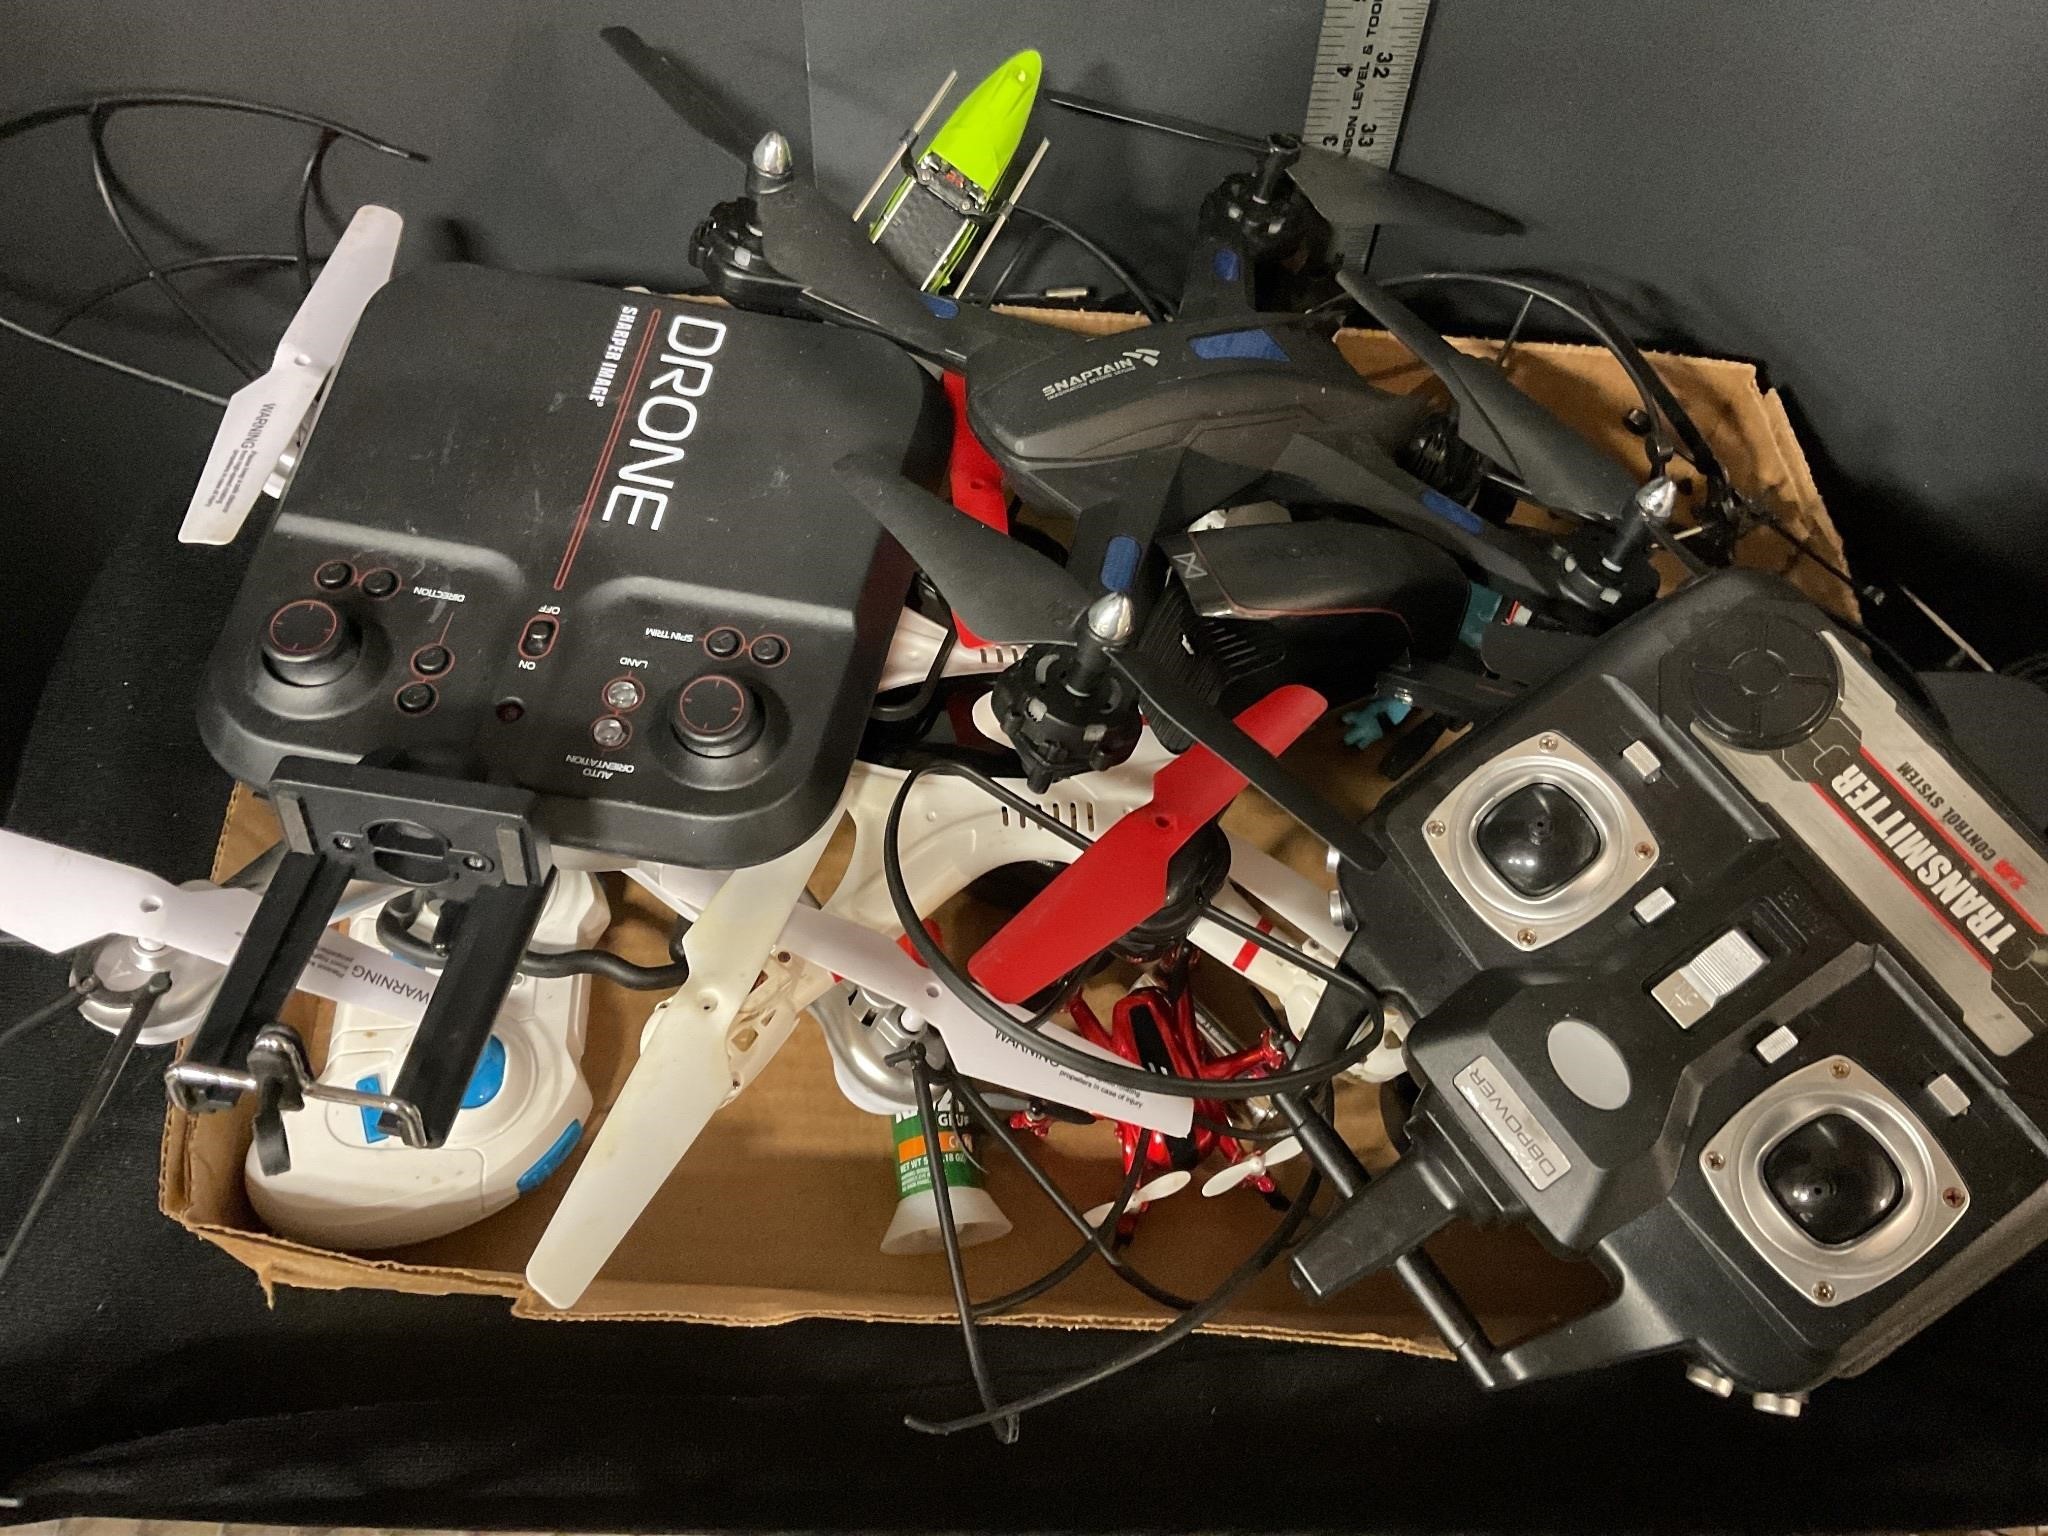 Flat of parts drones